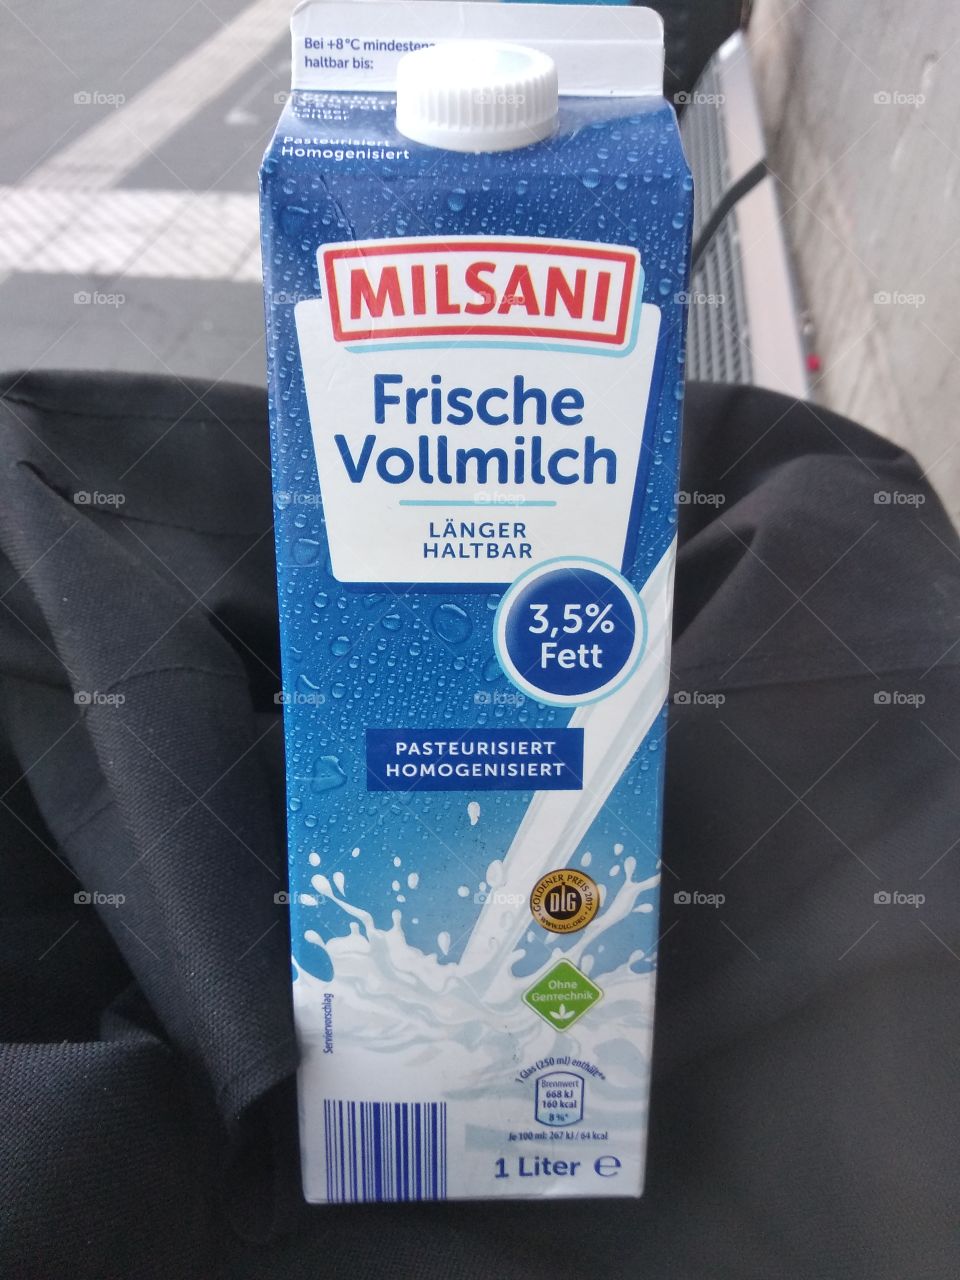 Milk, Germany